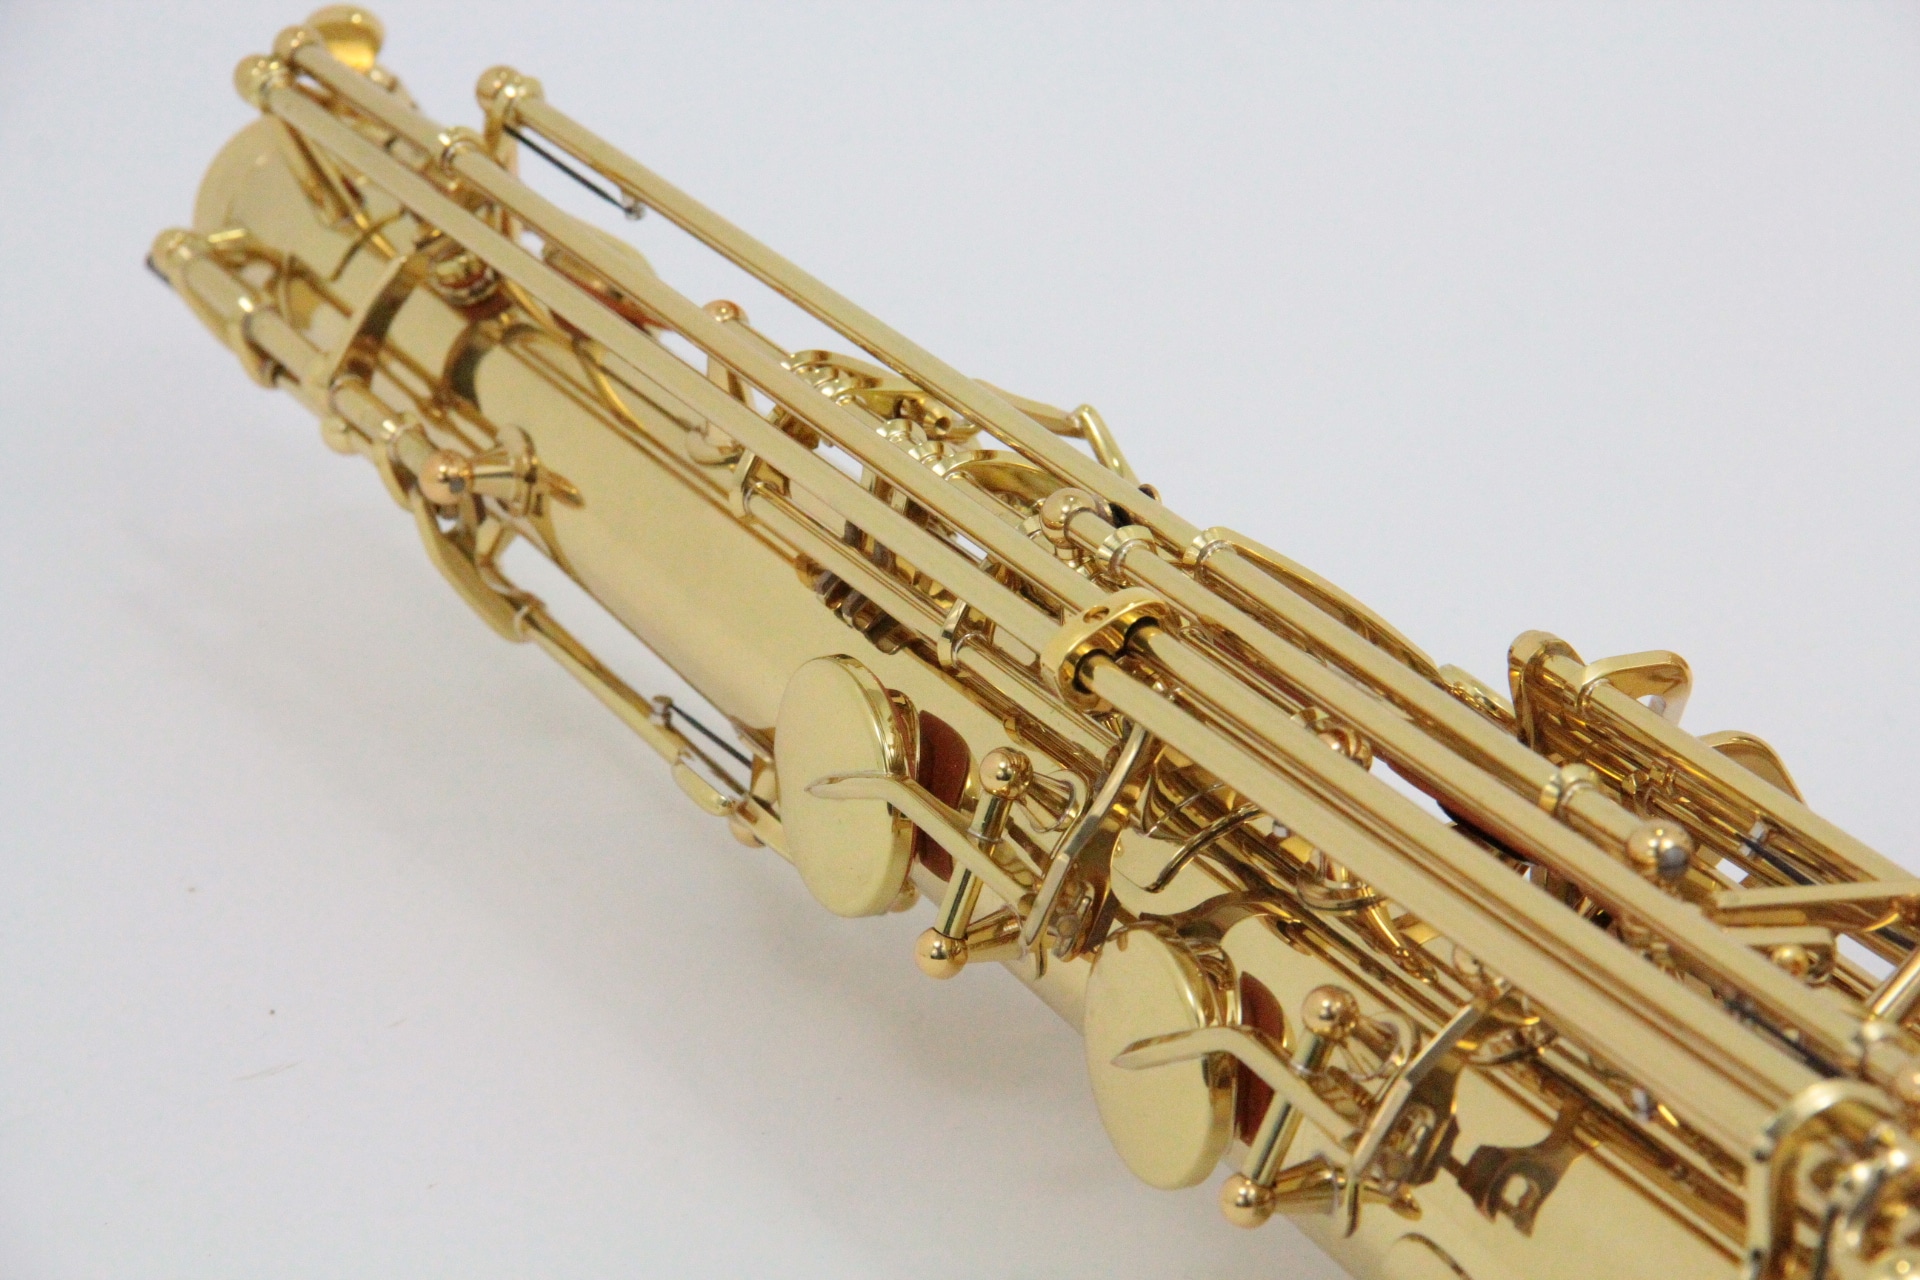 where to buy a yanagisawa tenor saxophone